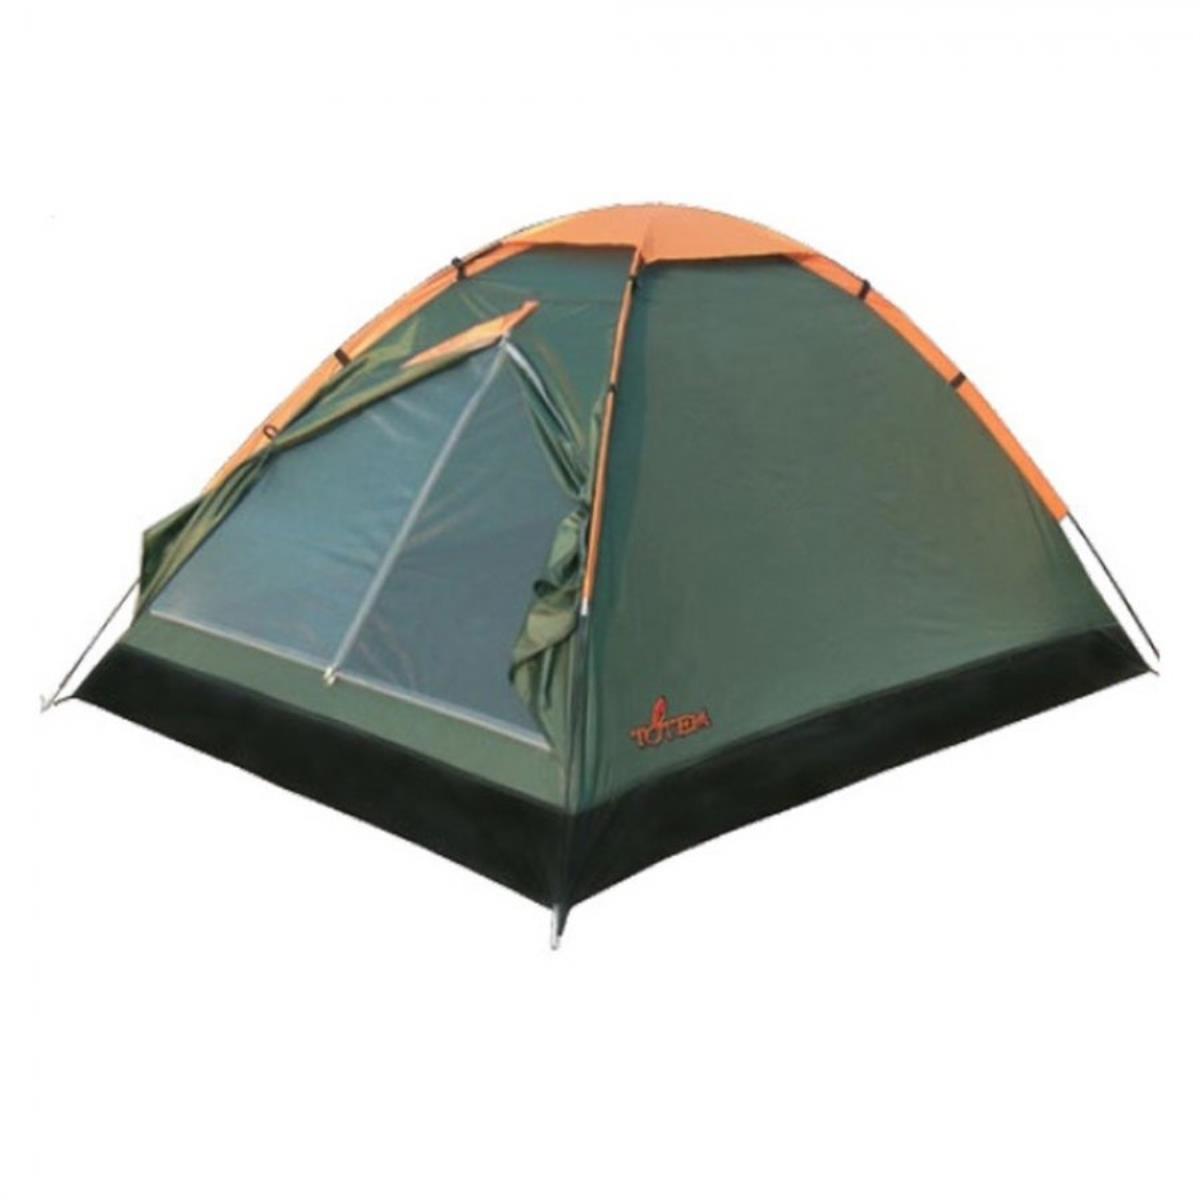 Походная палатка Summer 3 V2 (TTT-028) Totem палатка bluebird 2 v2 зеленый ttt 015 totem